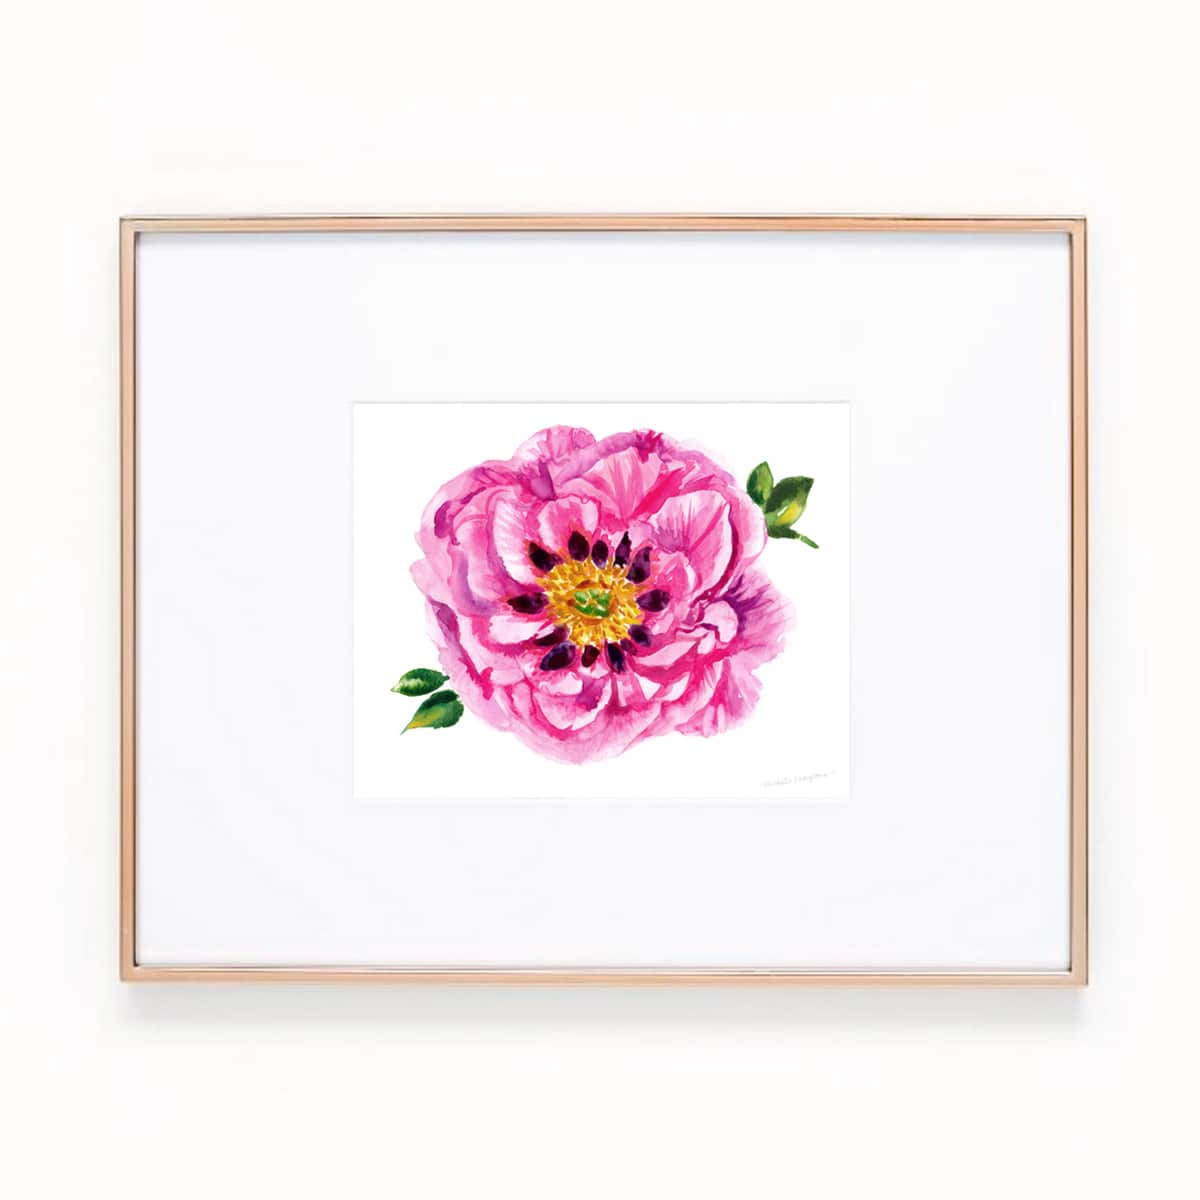 Pink floral watercolor painting art print by artist Michelle Mospens. | Mospens Studio